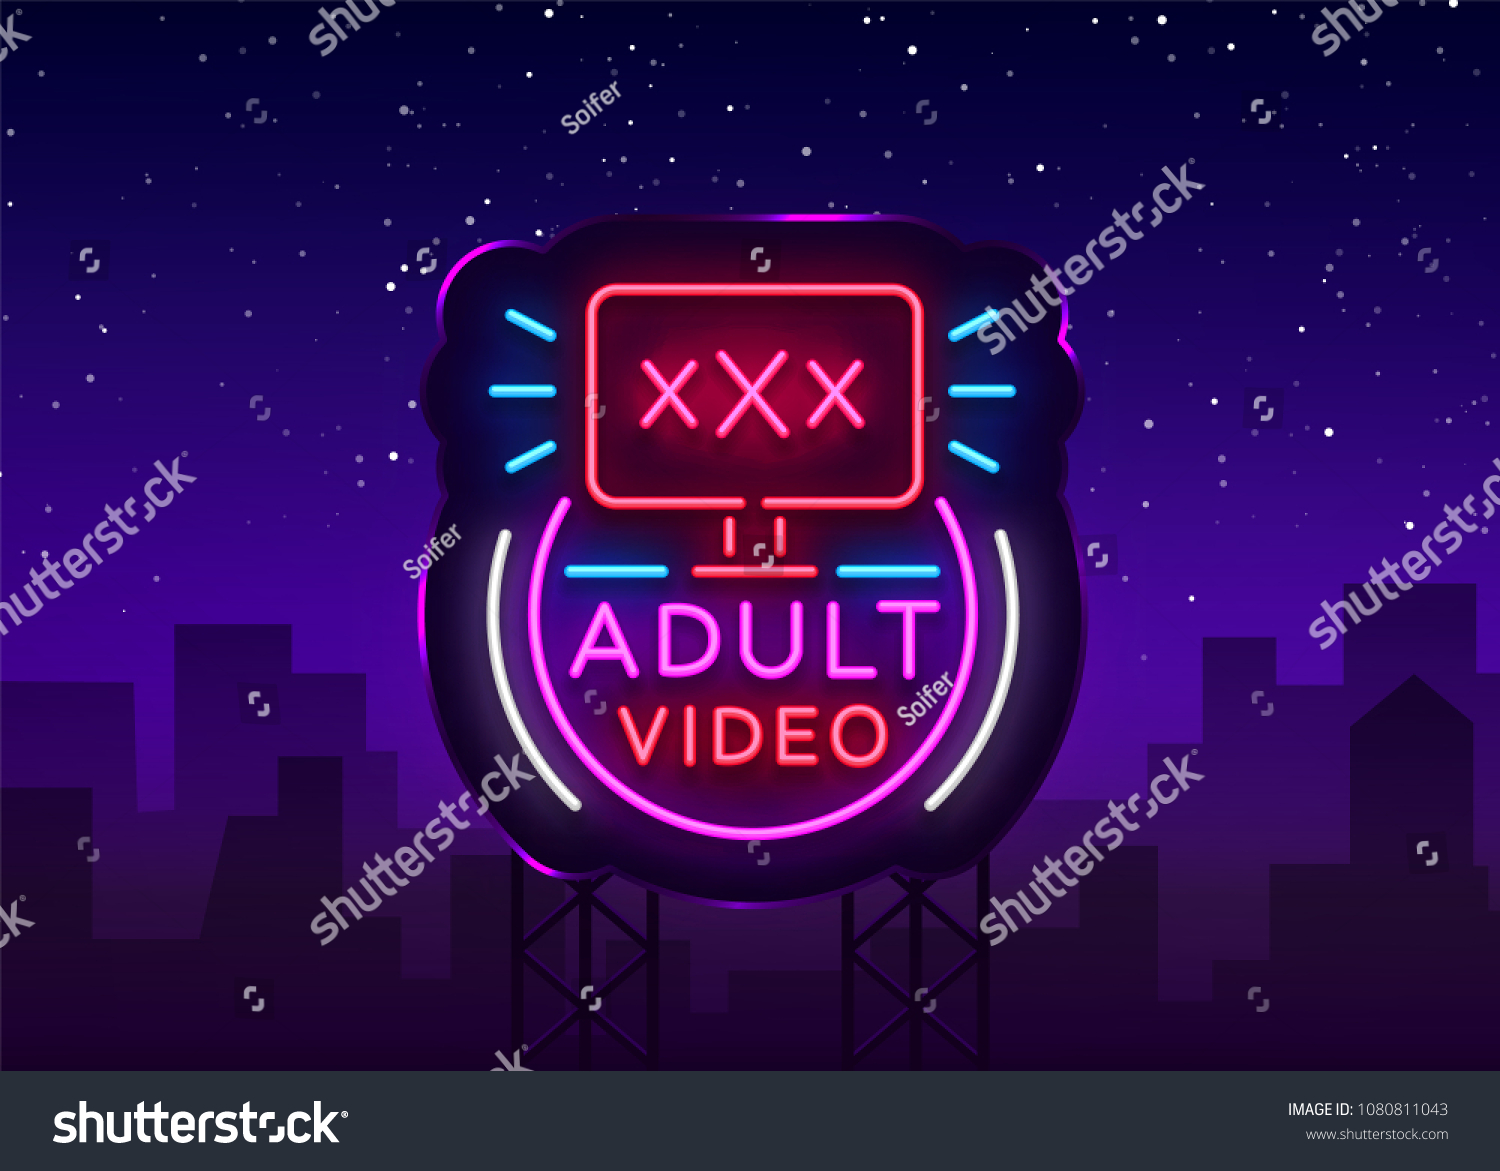 Adult Video Sex